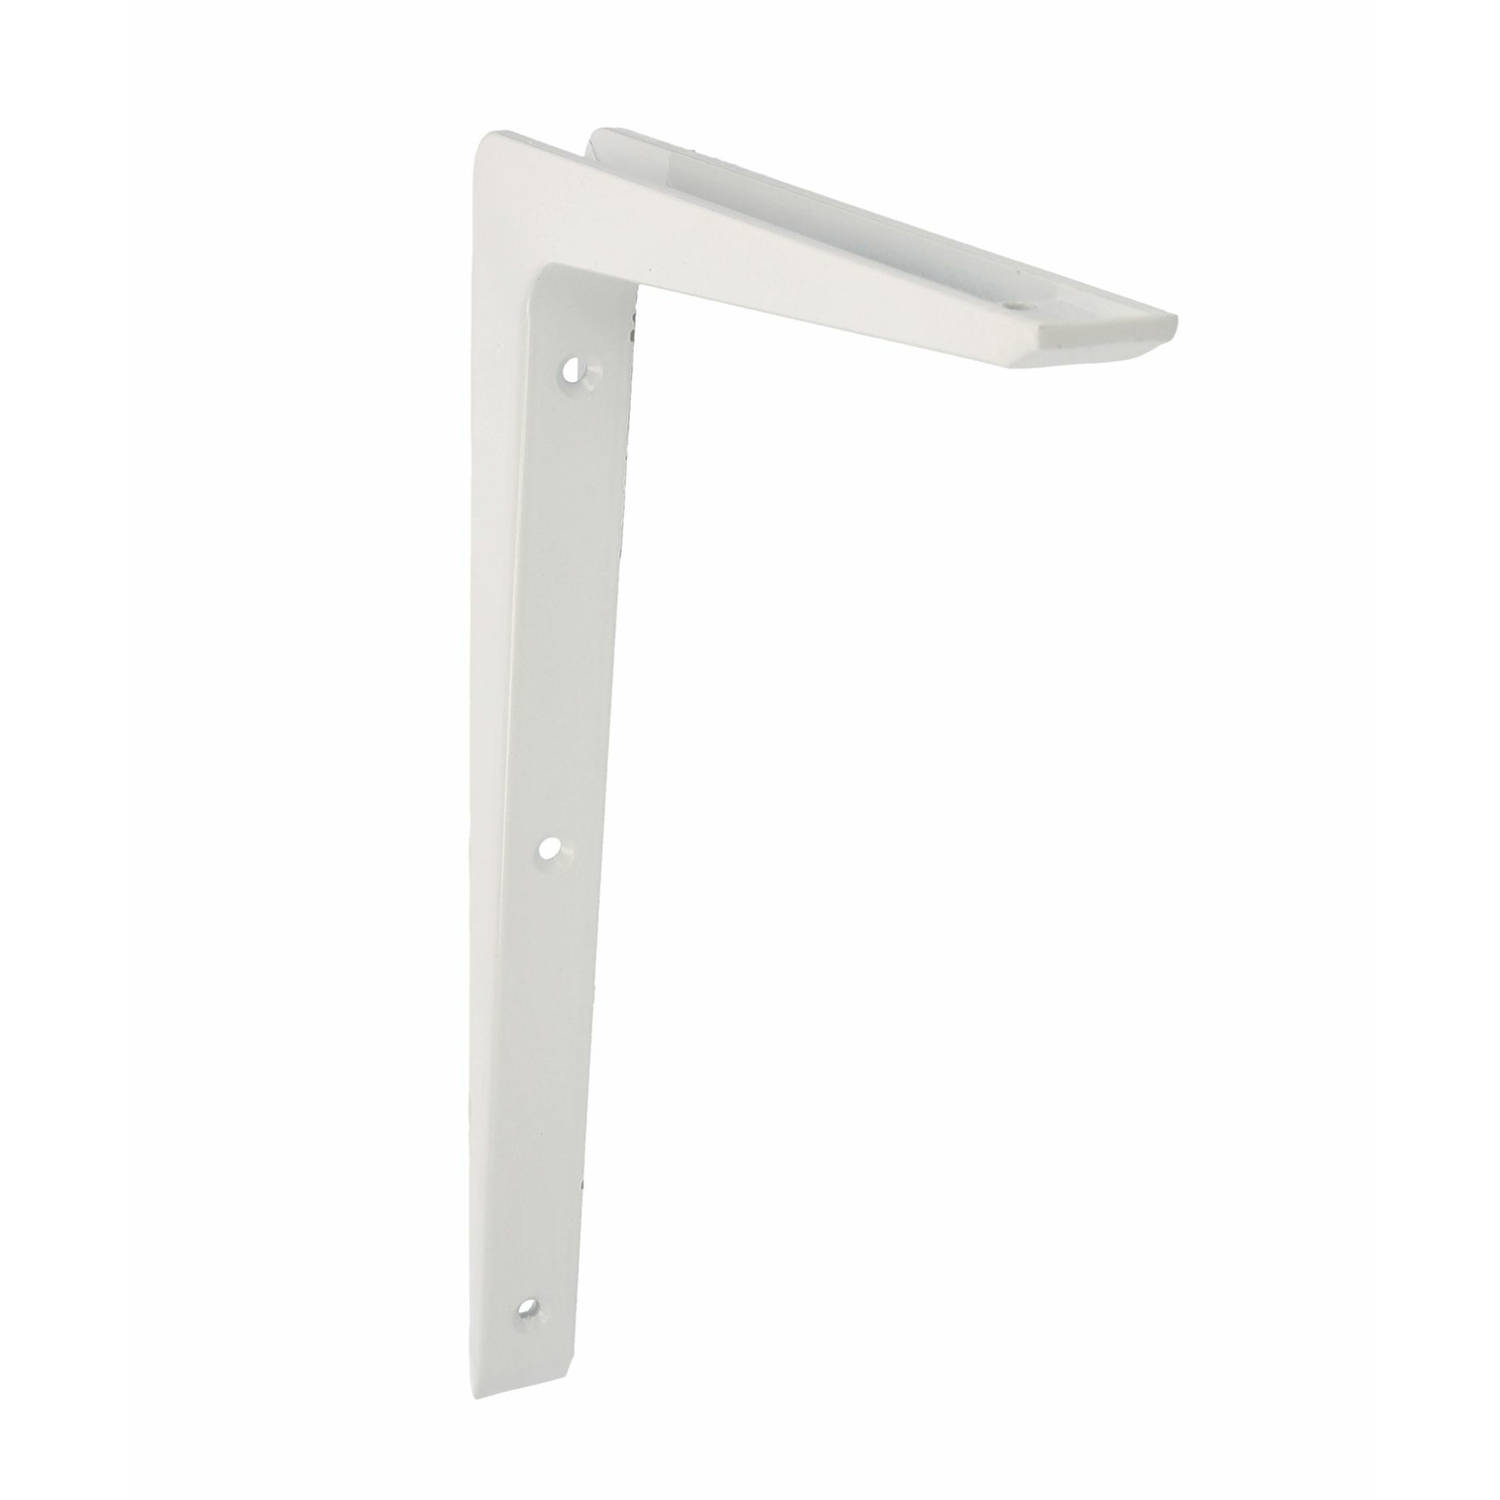 AMIG Plankdrager/planksteun - aluminium - gelakt wit - H250 x B200 mm - boekenplank steunen